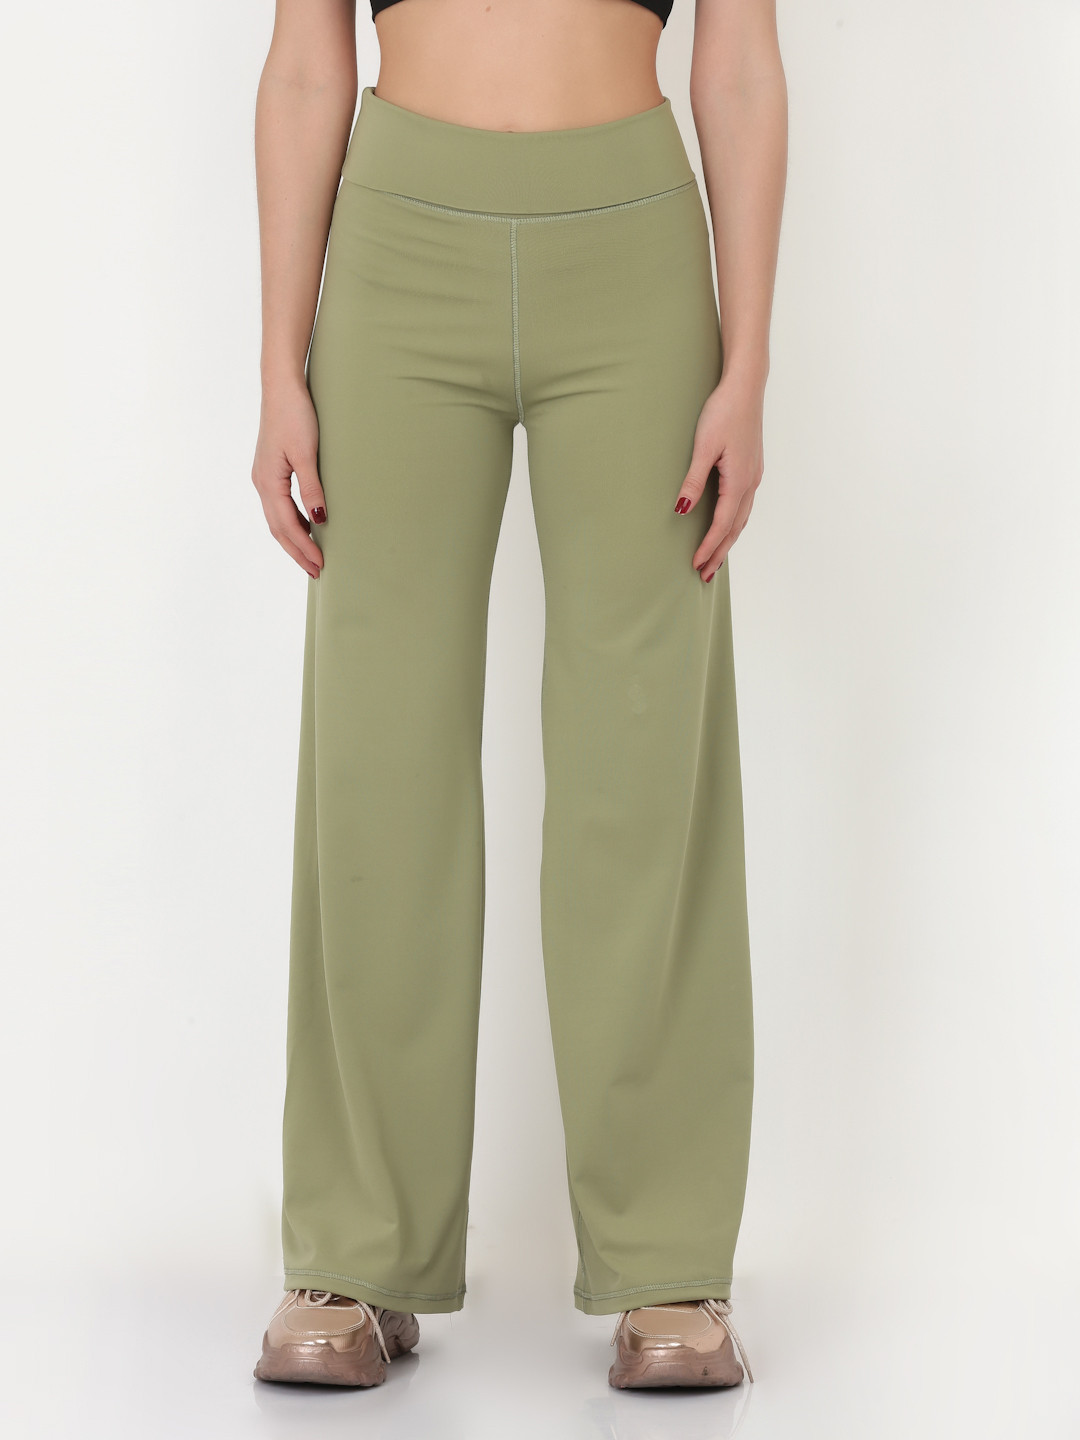 Green Flared High Rise Full Length Yoga Pants